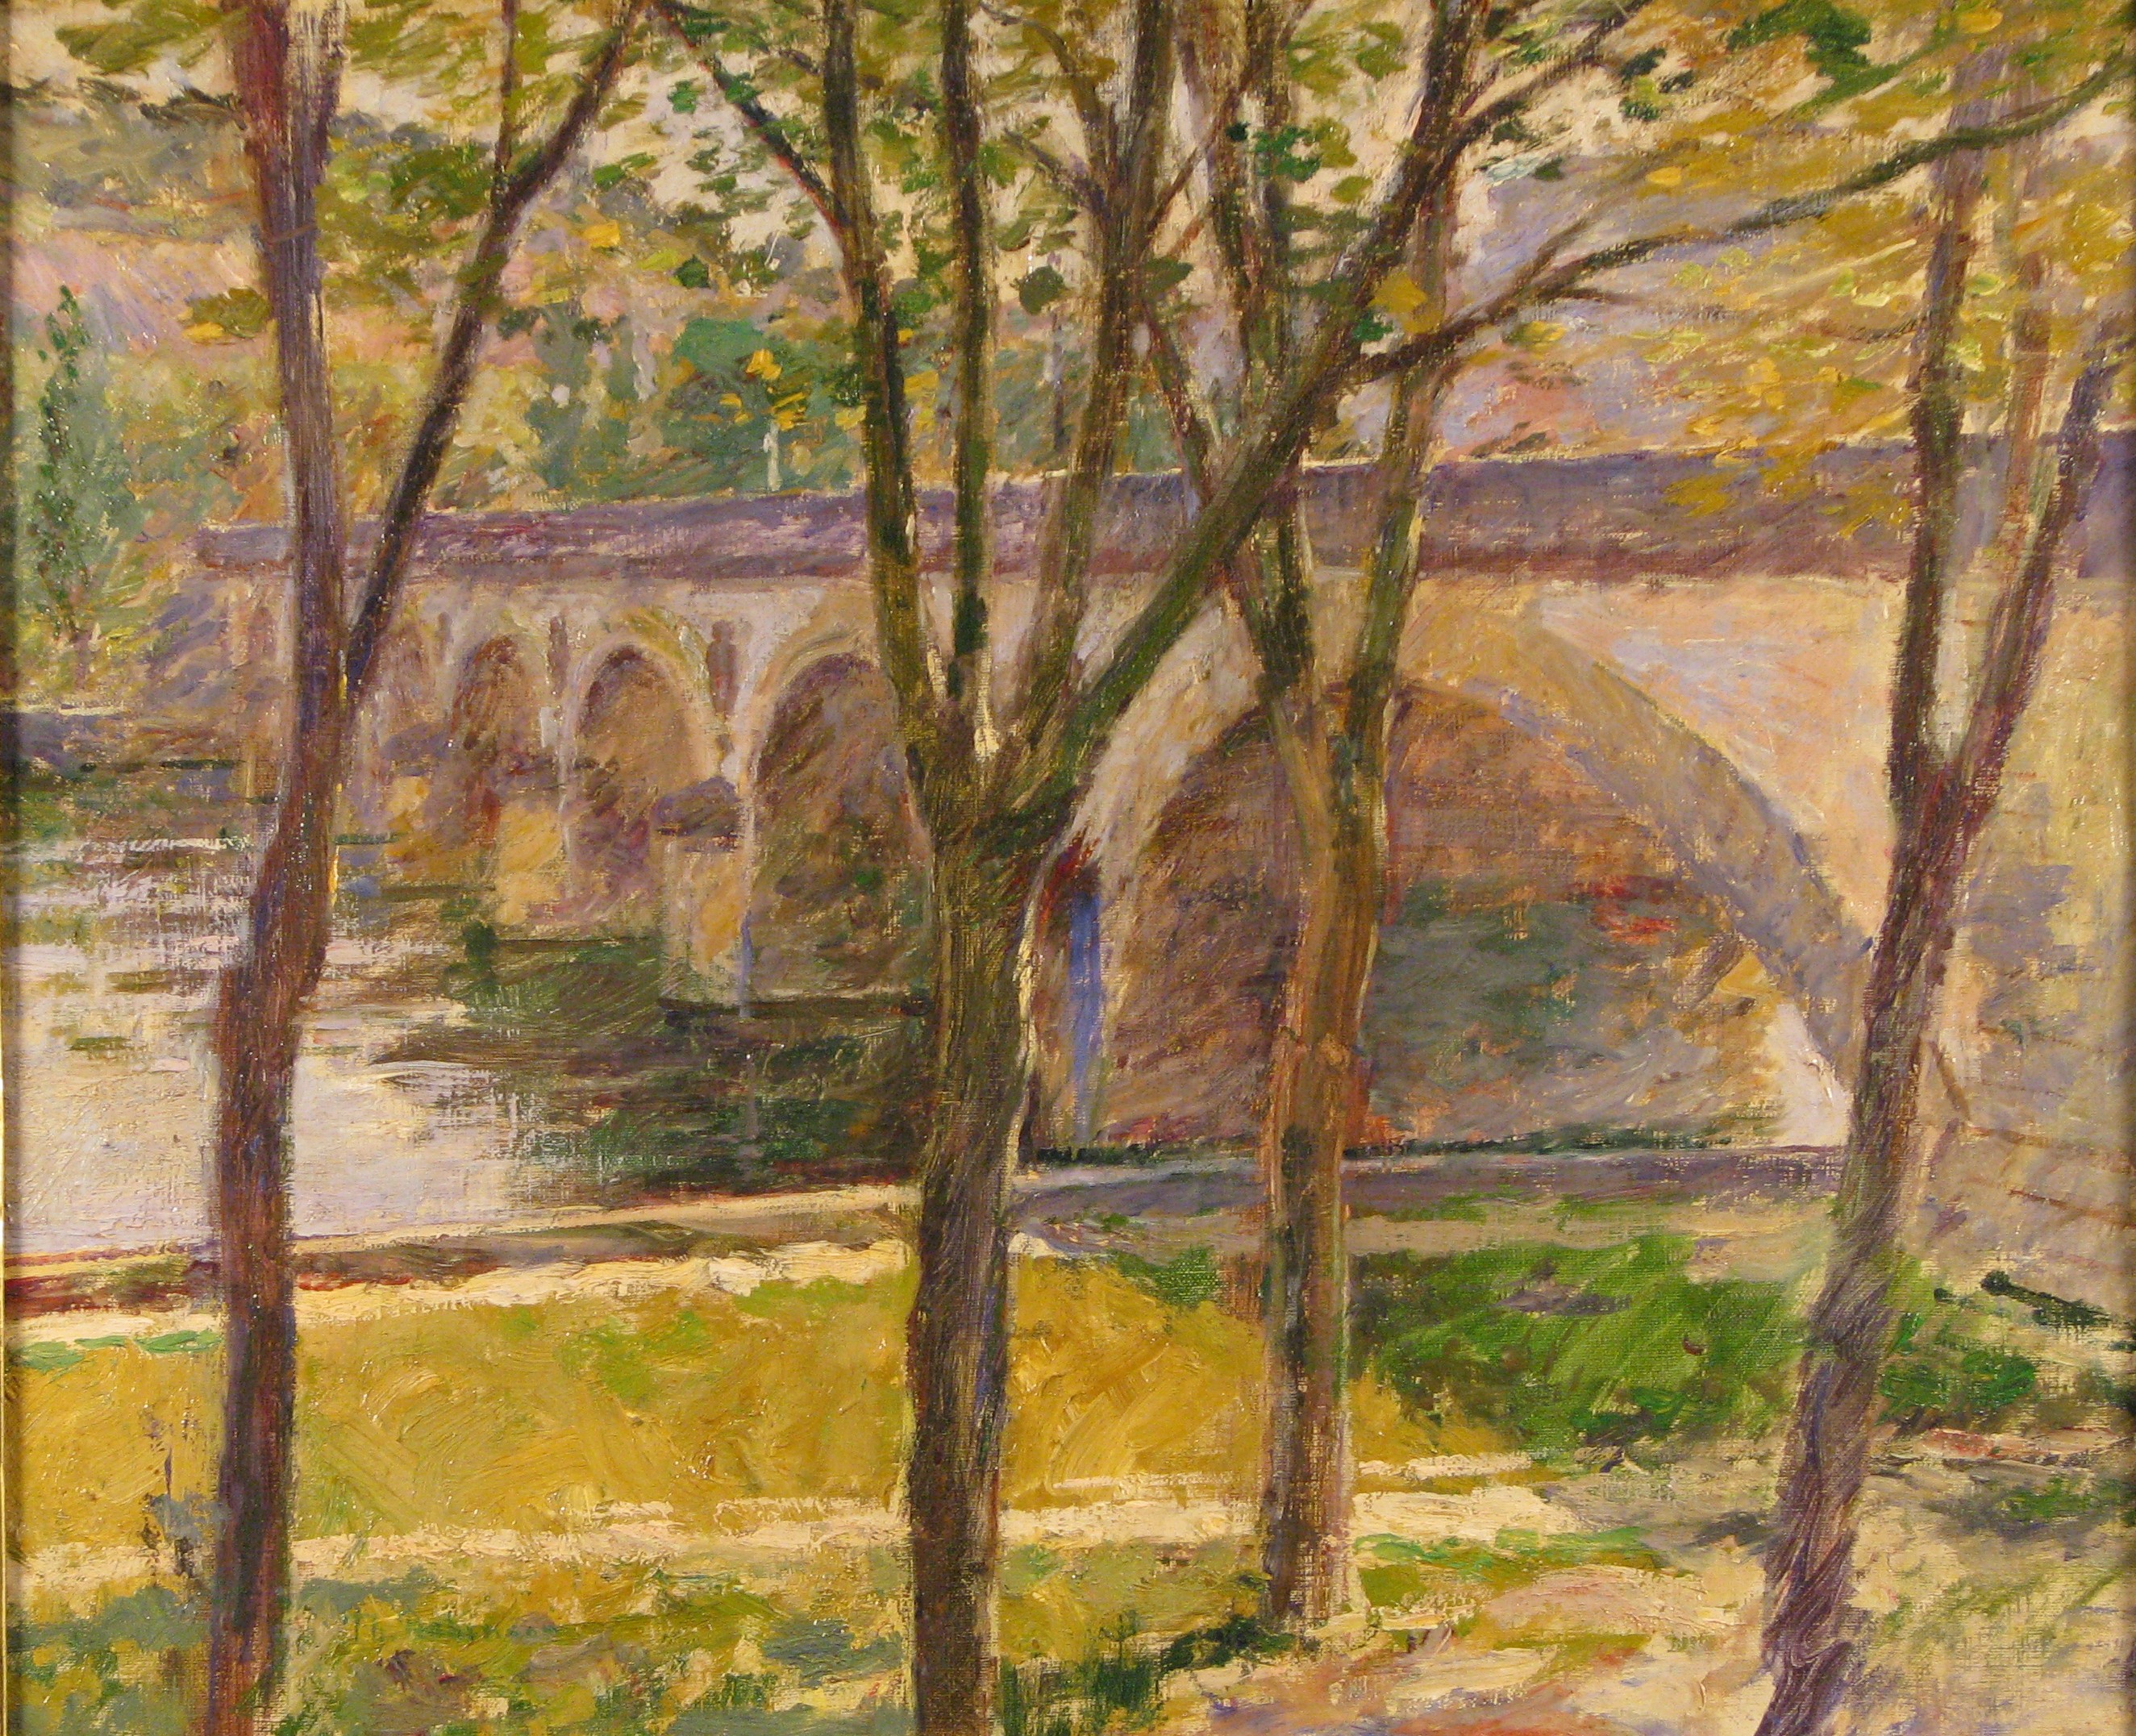 "The Bridge Near Giverny" by Theodore Robinson